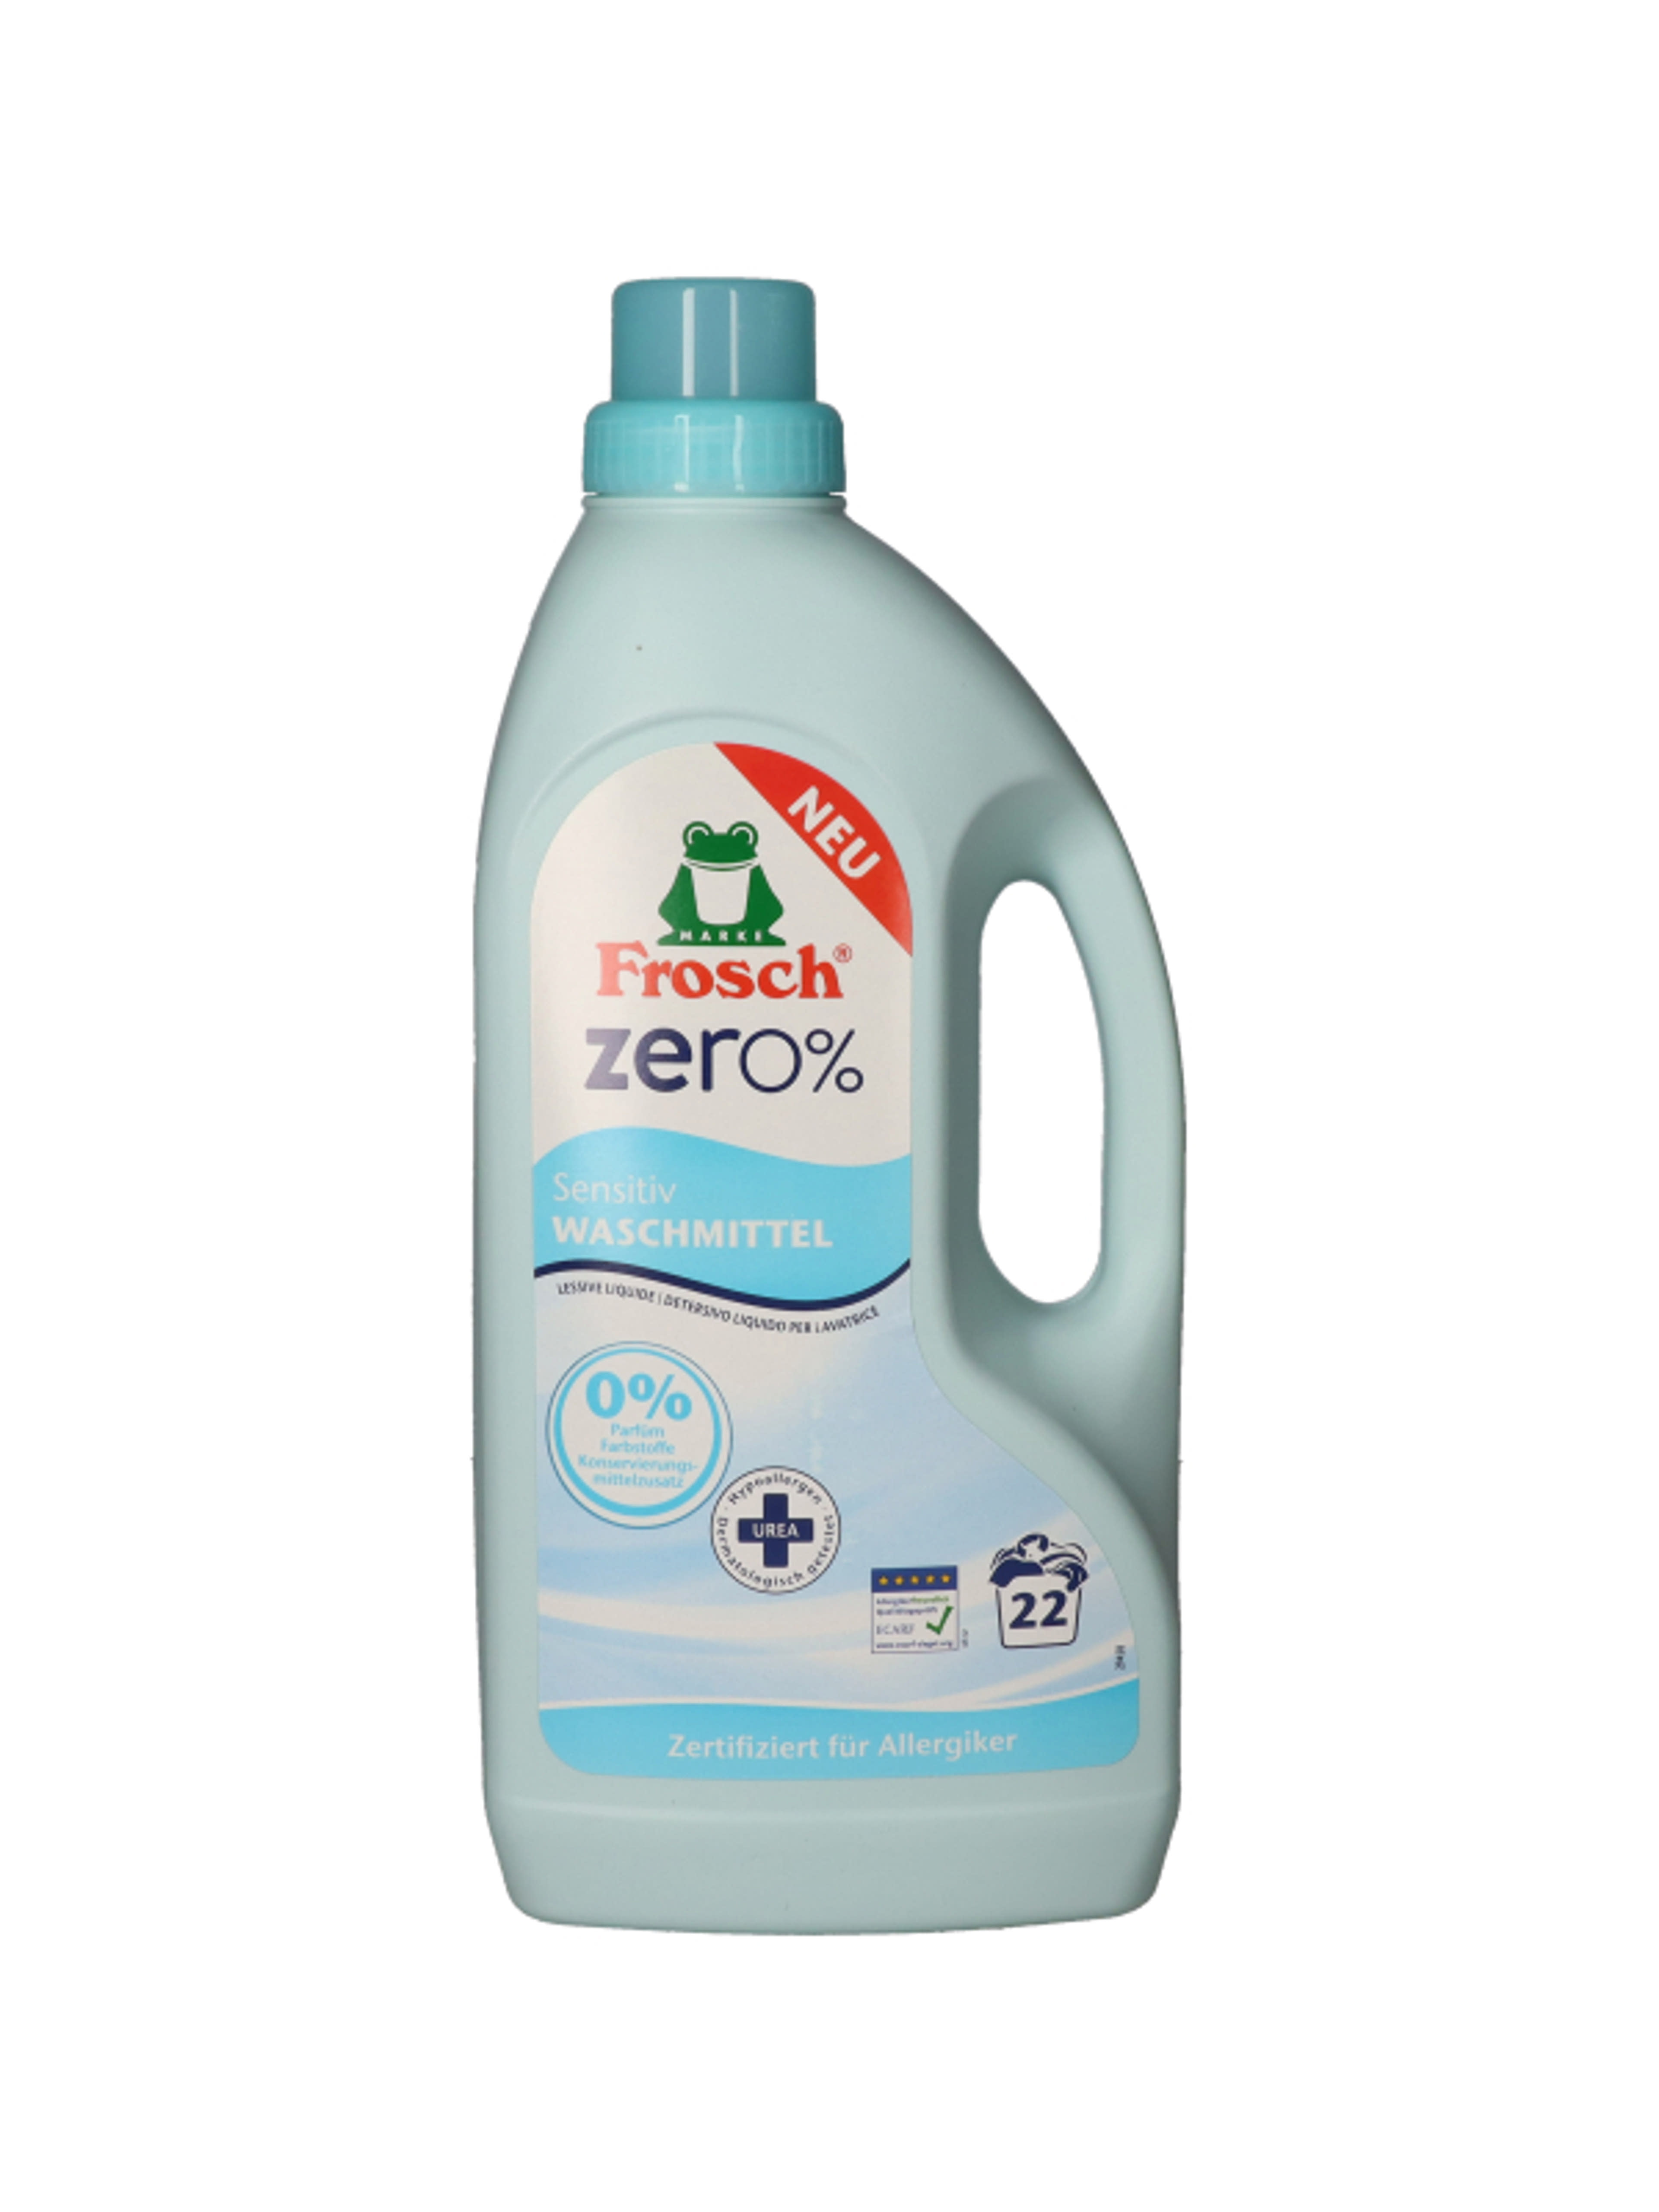 Frosch Zero folyékony mosószer, ureával - 1500 ml